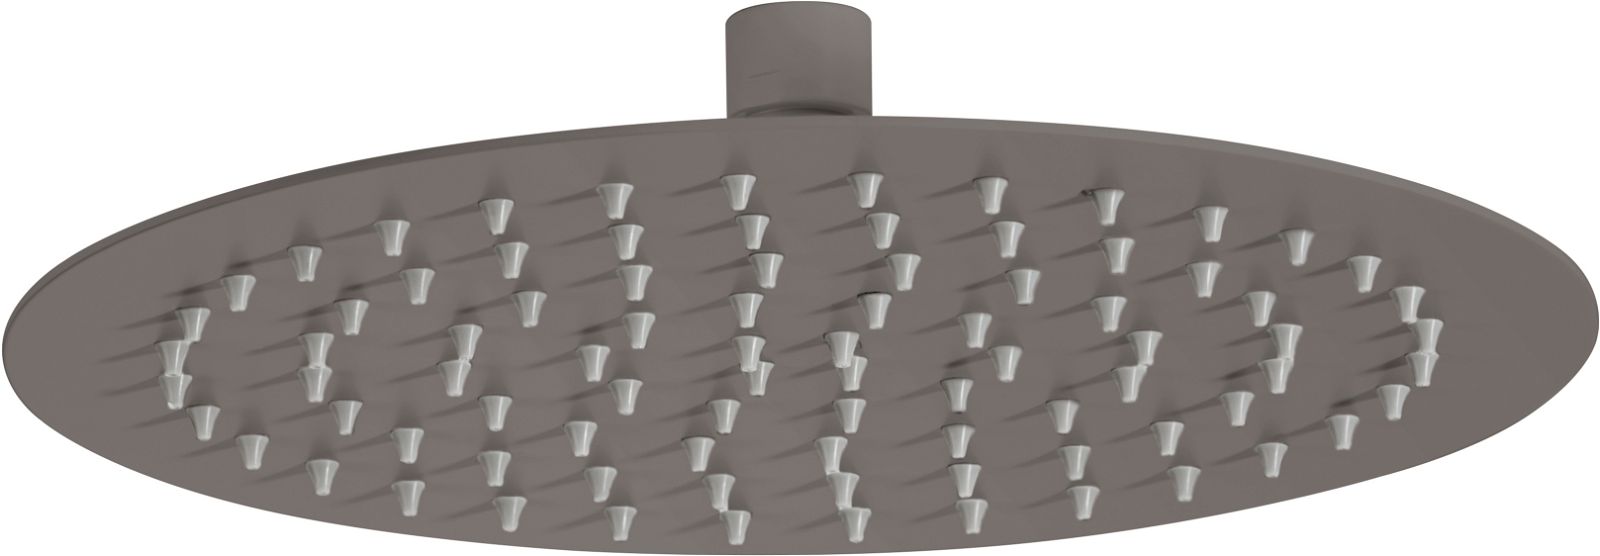 Zuhanyfej, kerek - 250 mm - NAC_D10K - Główne zdjęcie produktowe